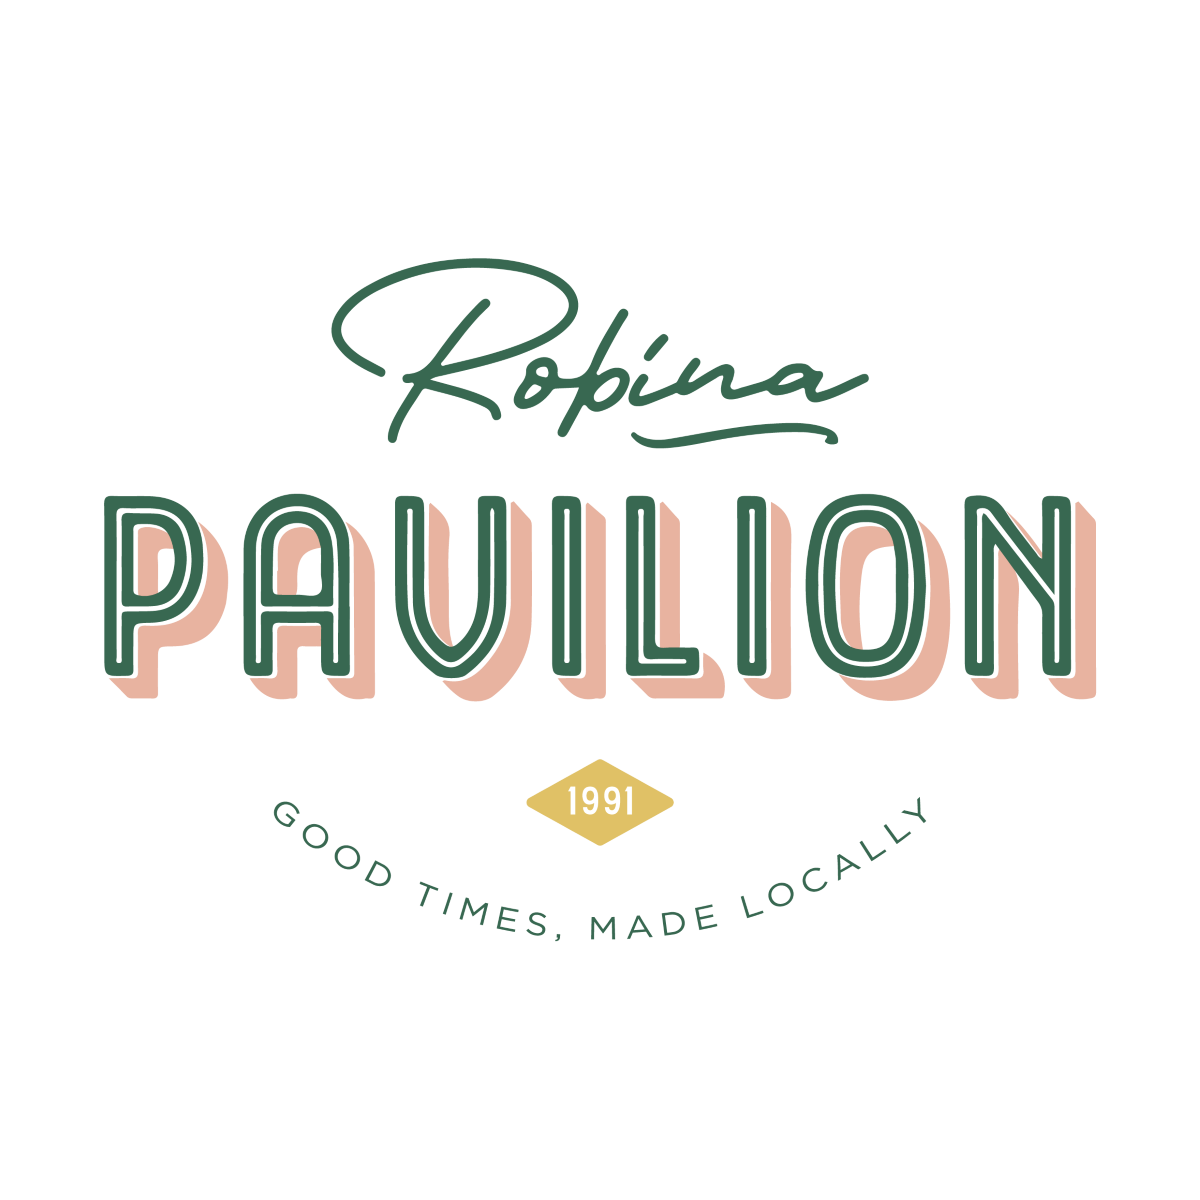 Fitzgibbons Hotels & Leisure, Robina Pavilion Logo